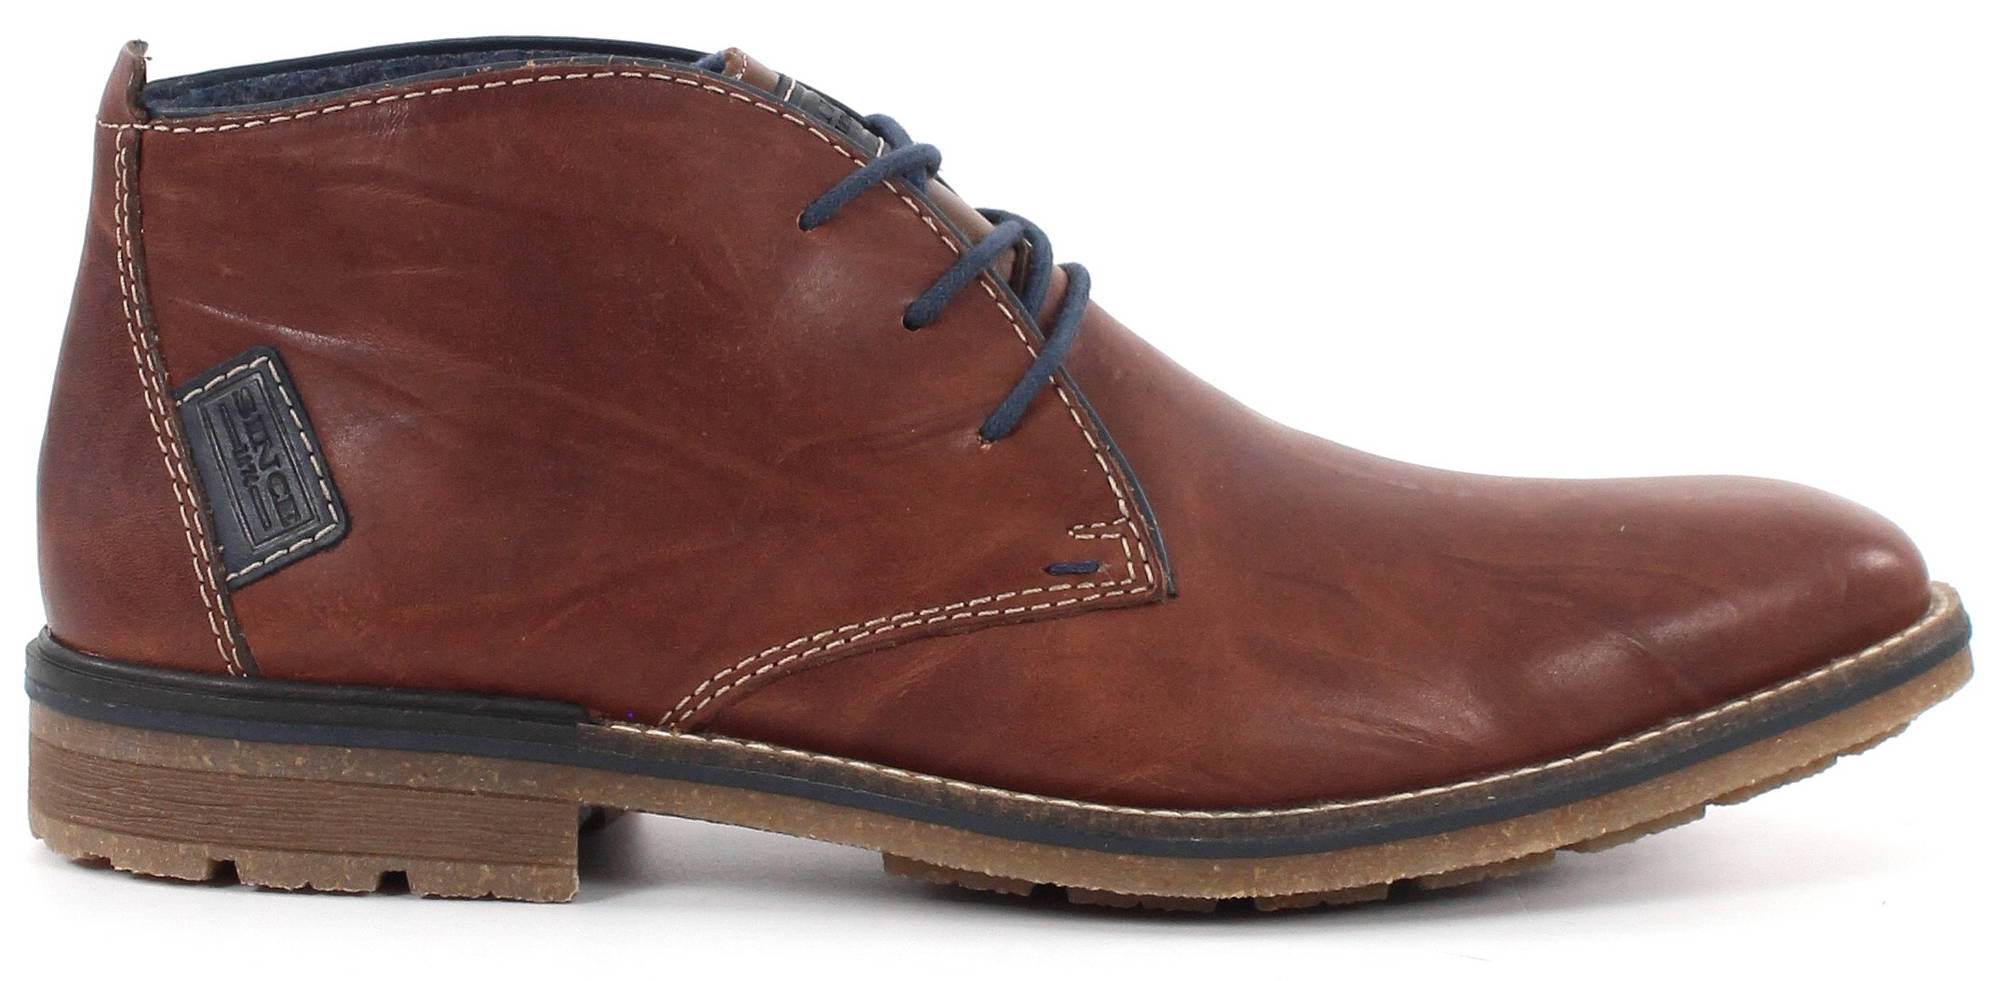 Rieker Ankle Boots F1310-25, Brown - Stilettoshop.eu webstore